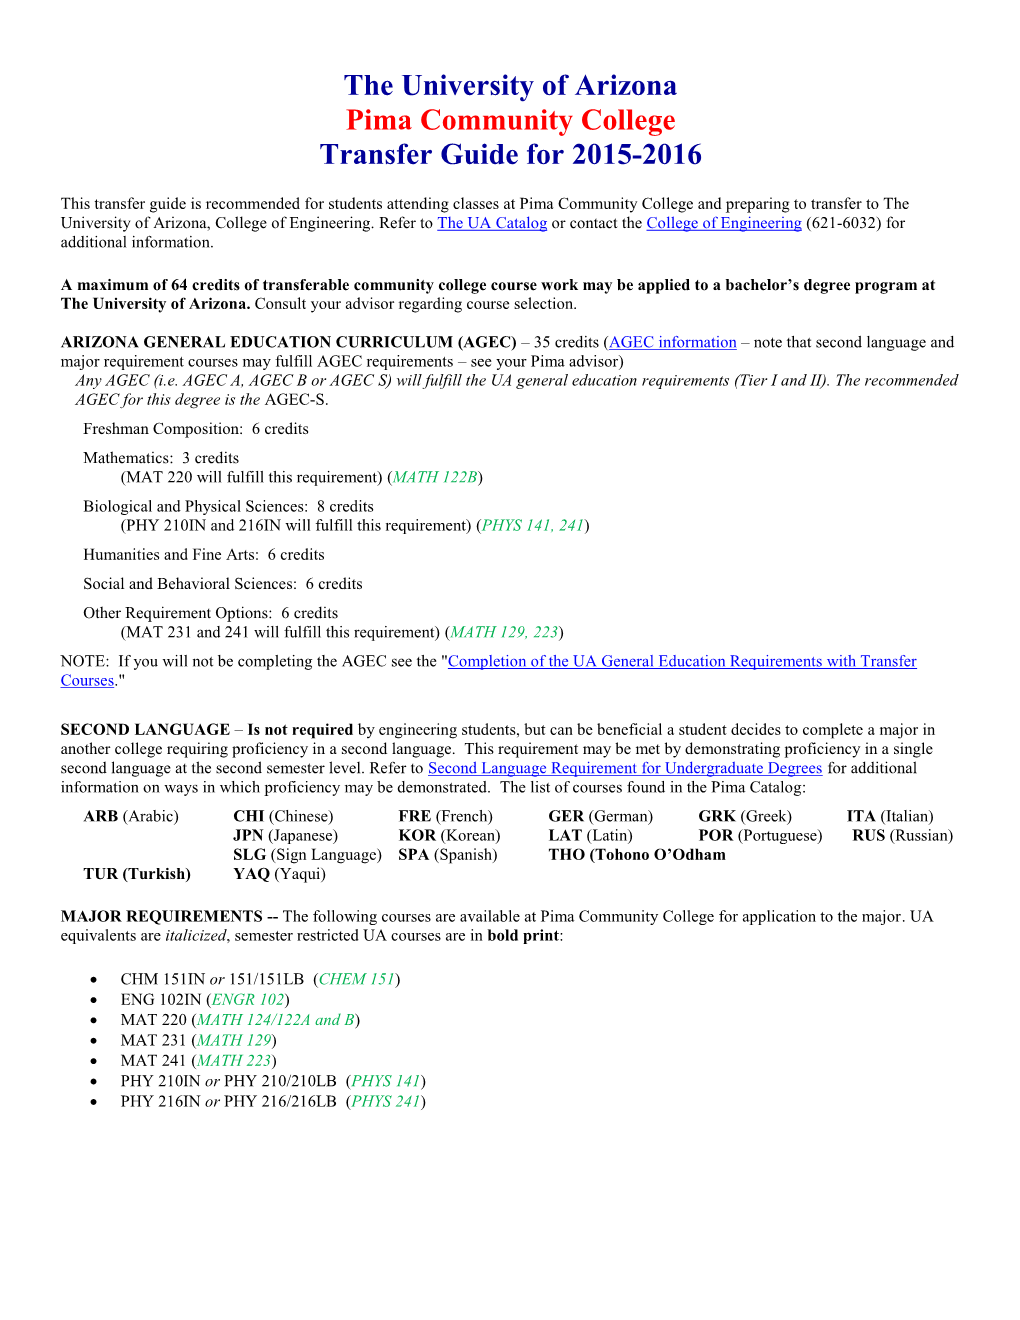 The University of Arizona Pima Community College Transfer Guide for 2015-2016